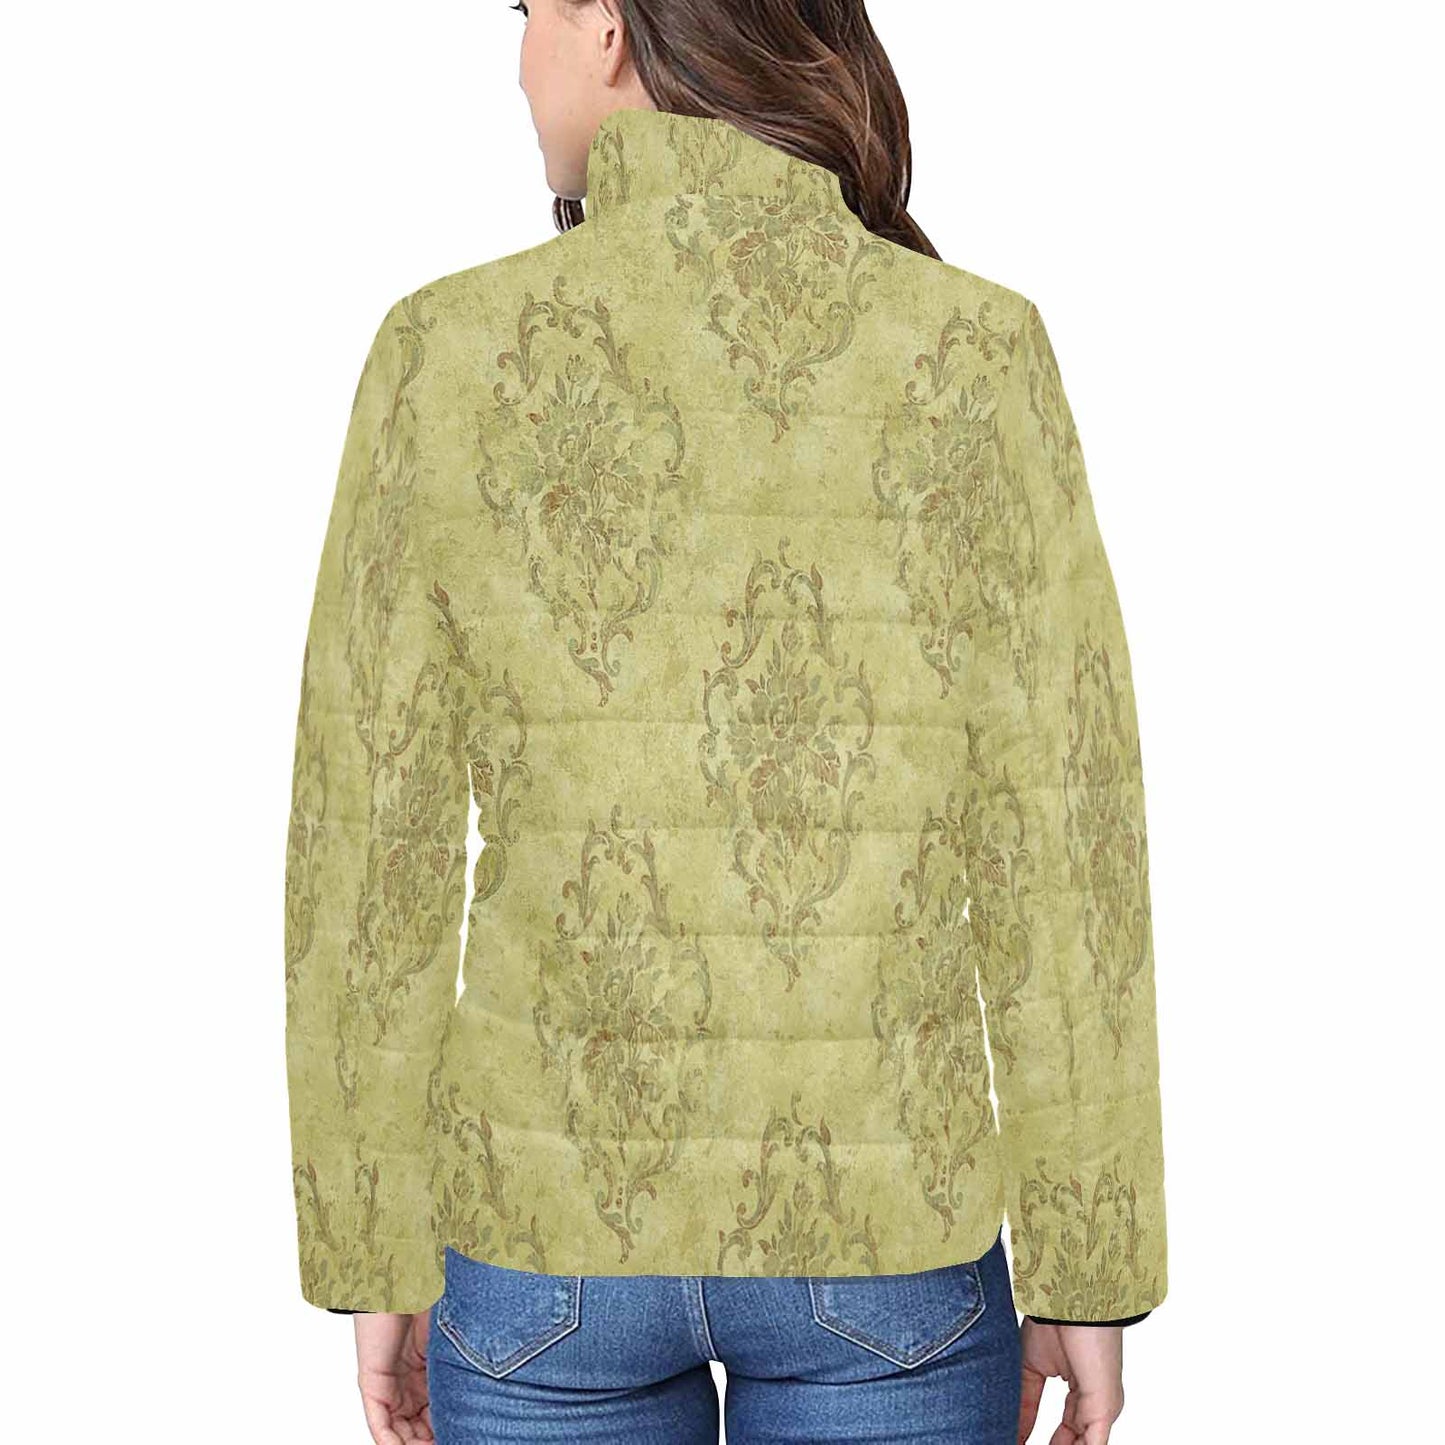 Antique general print quilted jacket, design 05